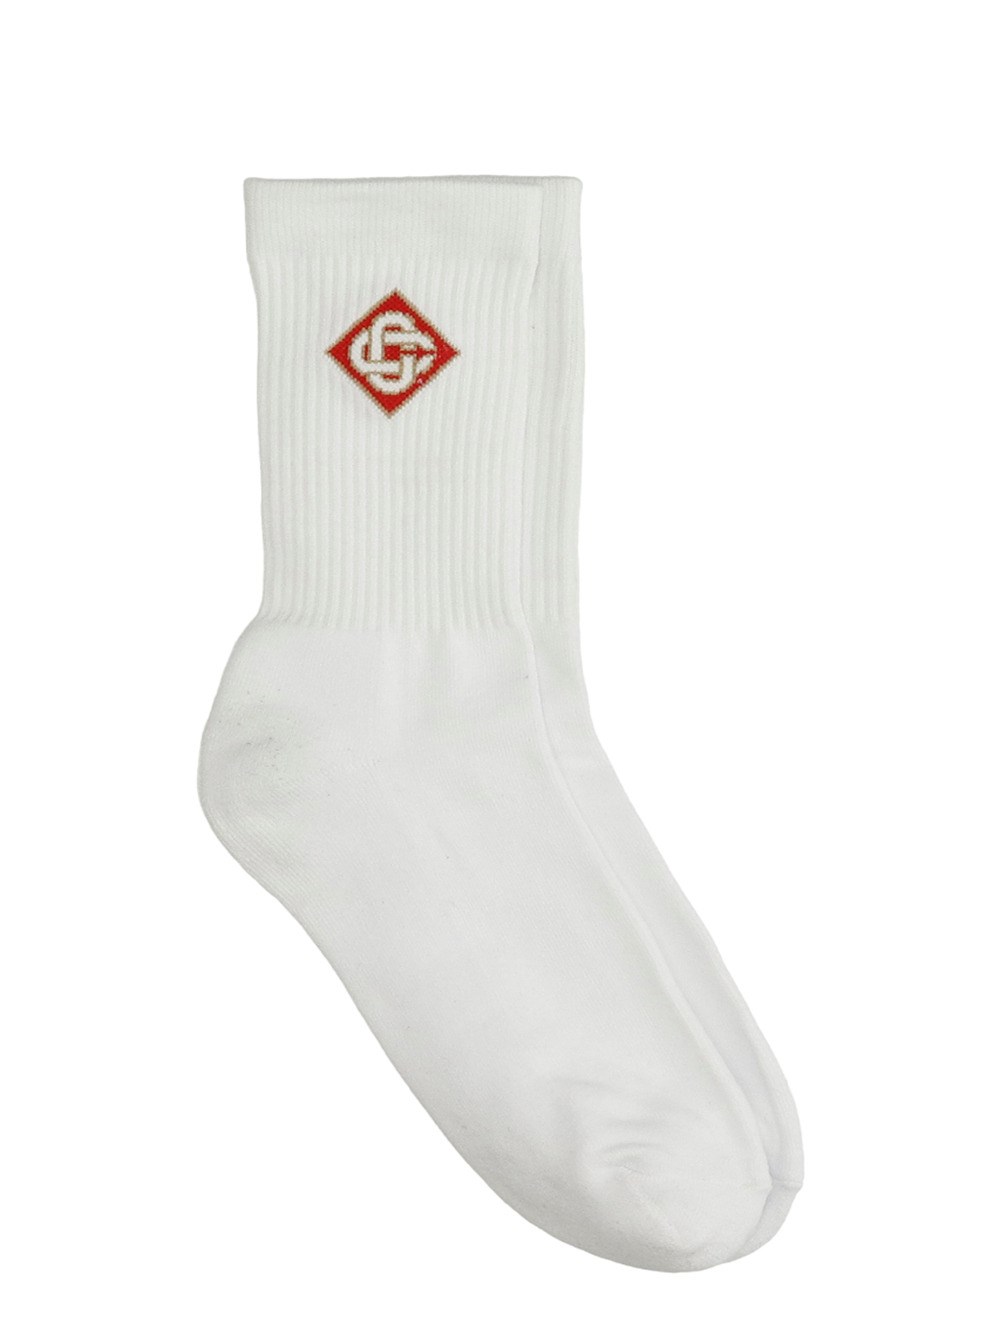 Casablanca White Cotton Socks